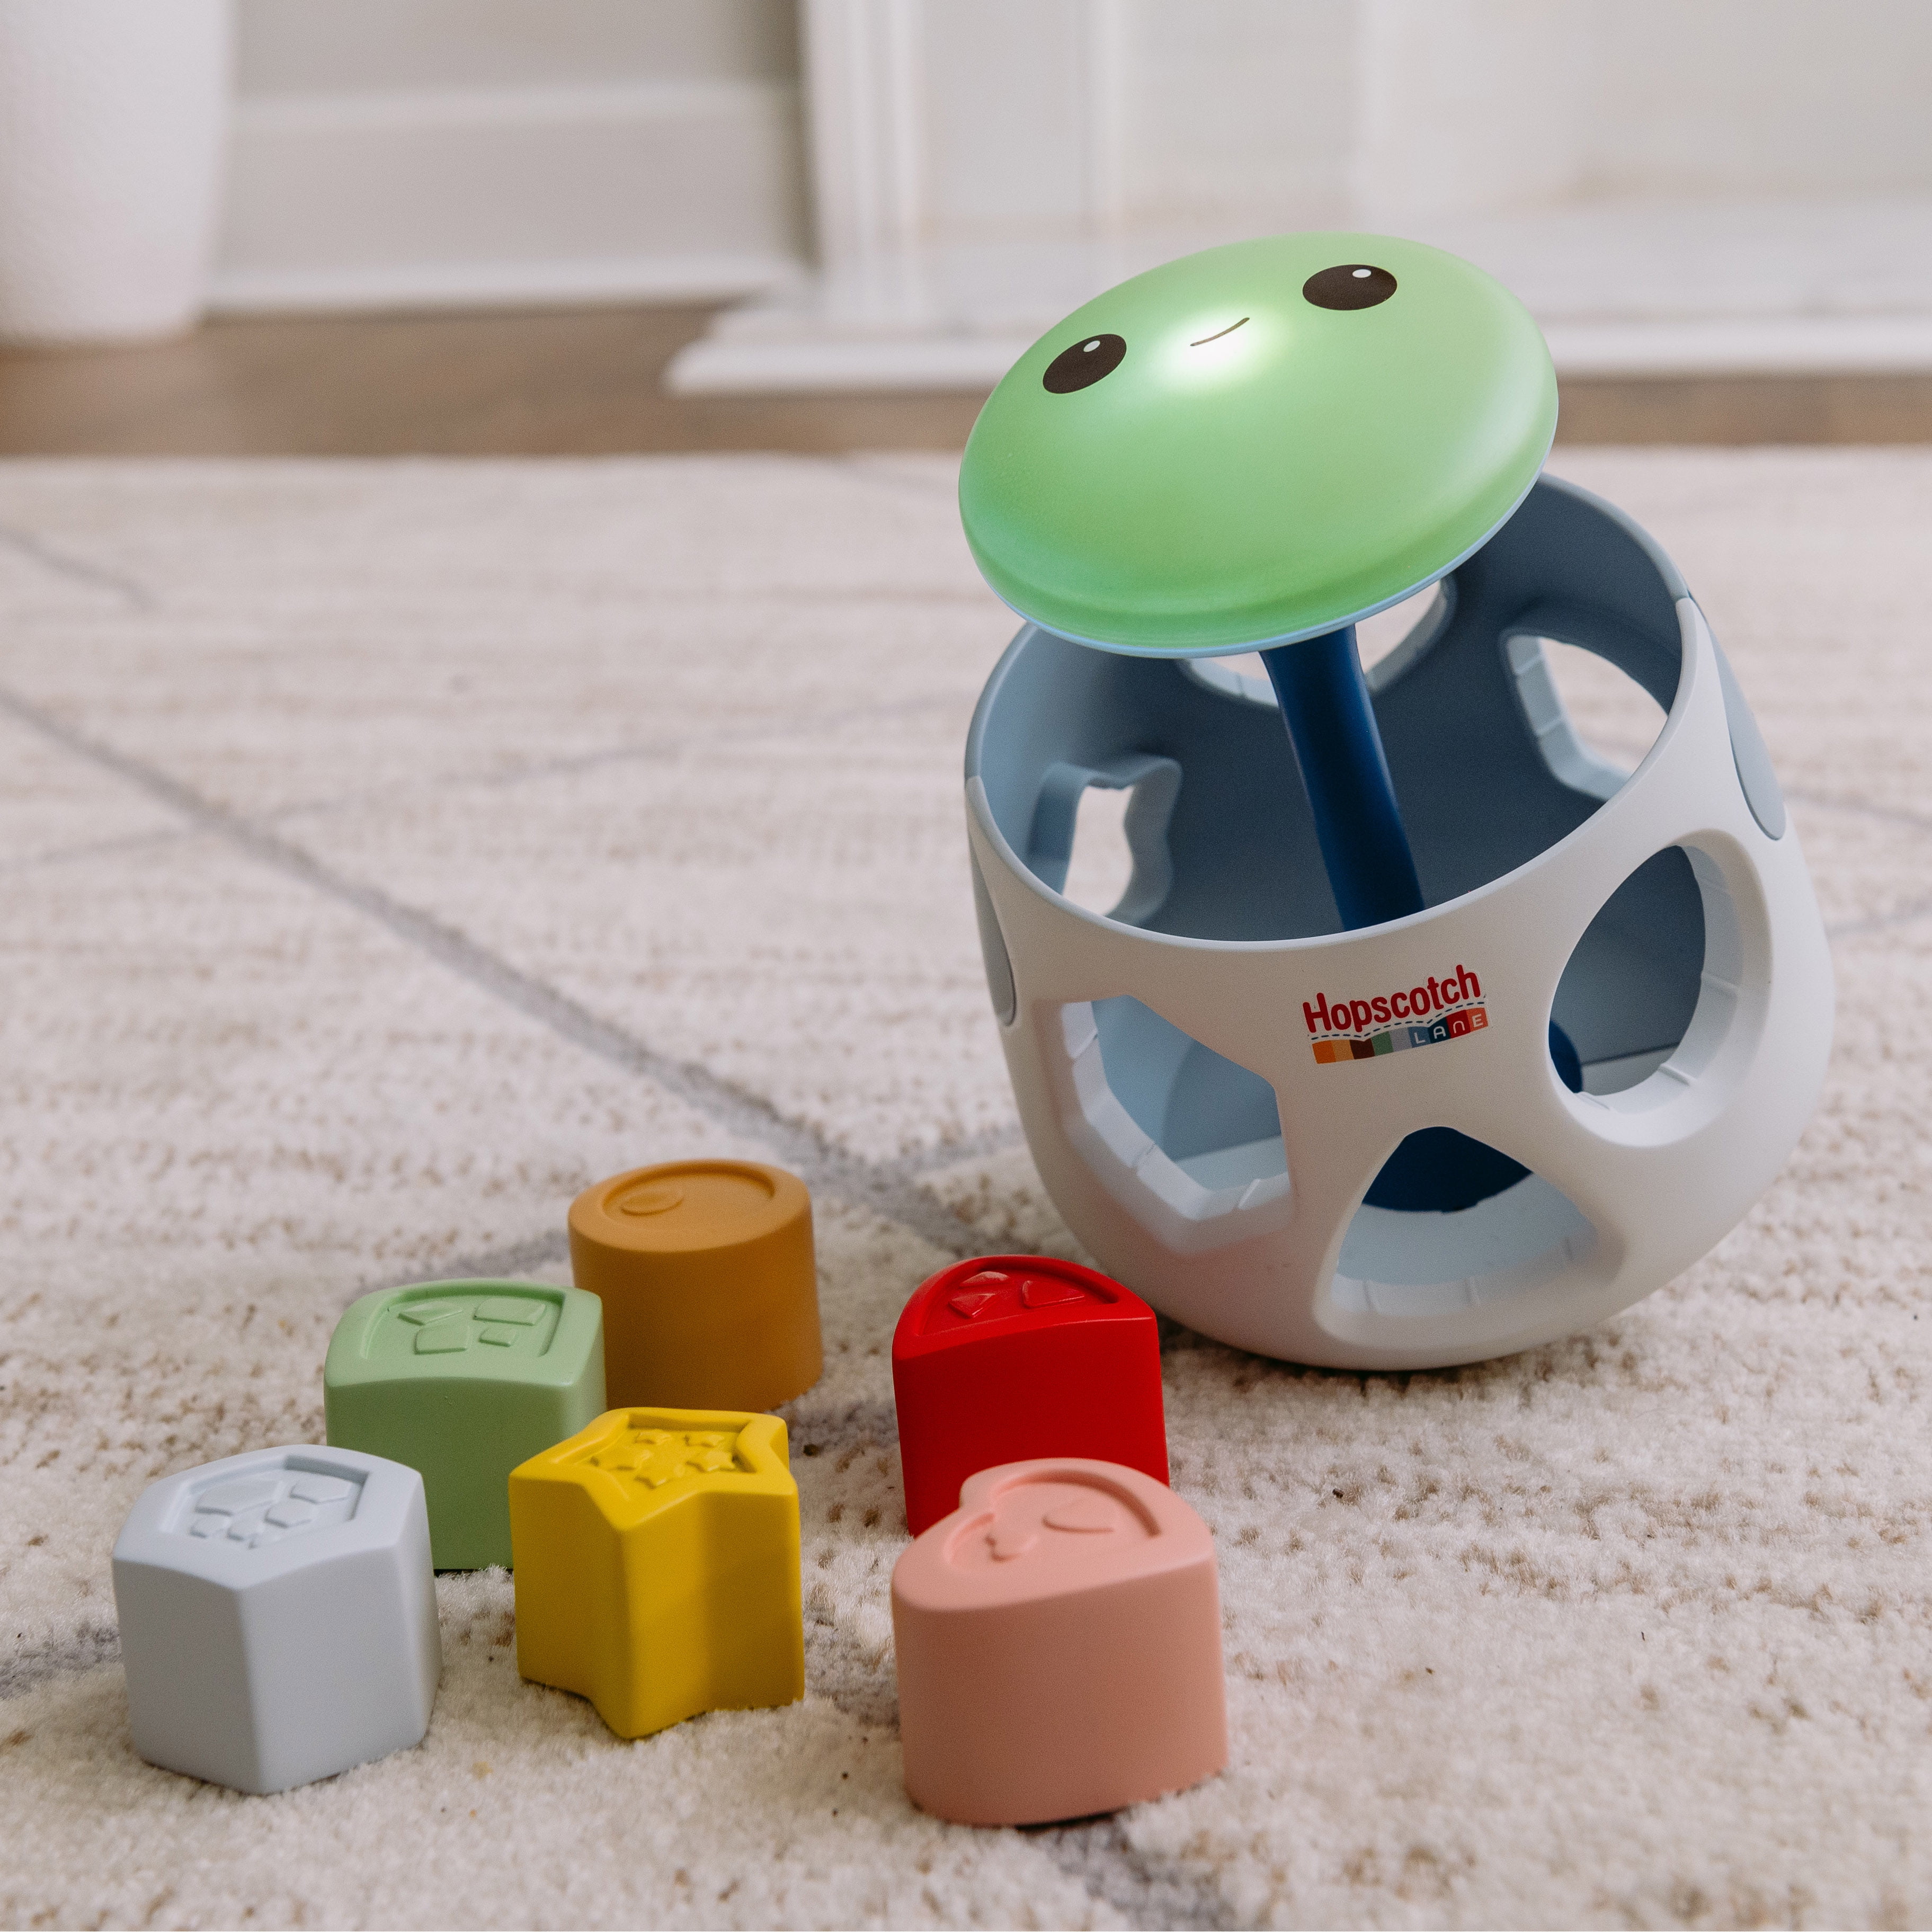 Turtle, Shape Roll-N-Sort Hopscotch Toy, Up & Baby Lane 12+ Toddler Unisex, Light Months Sorting